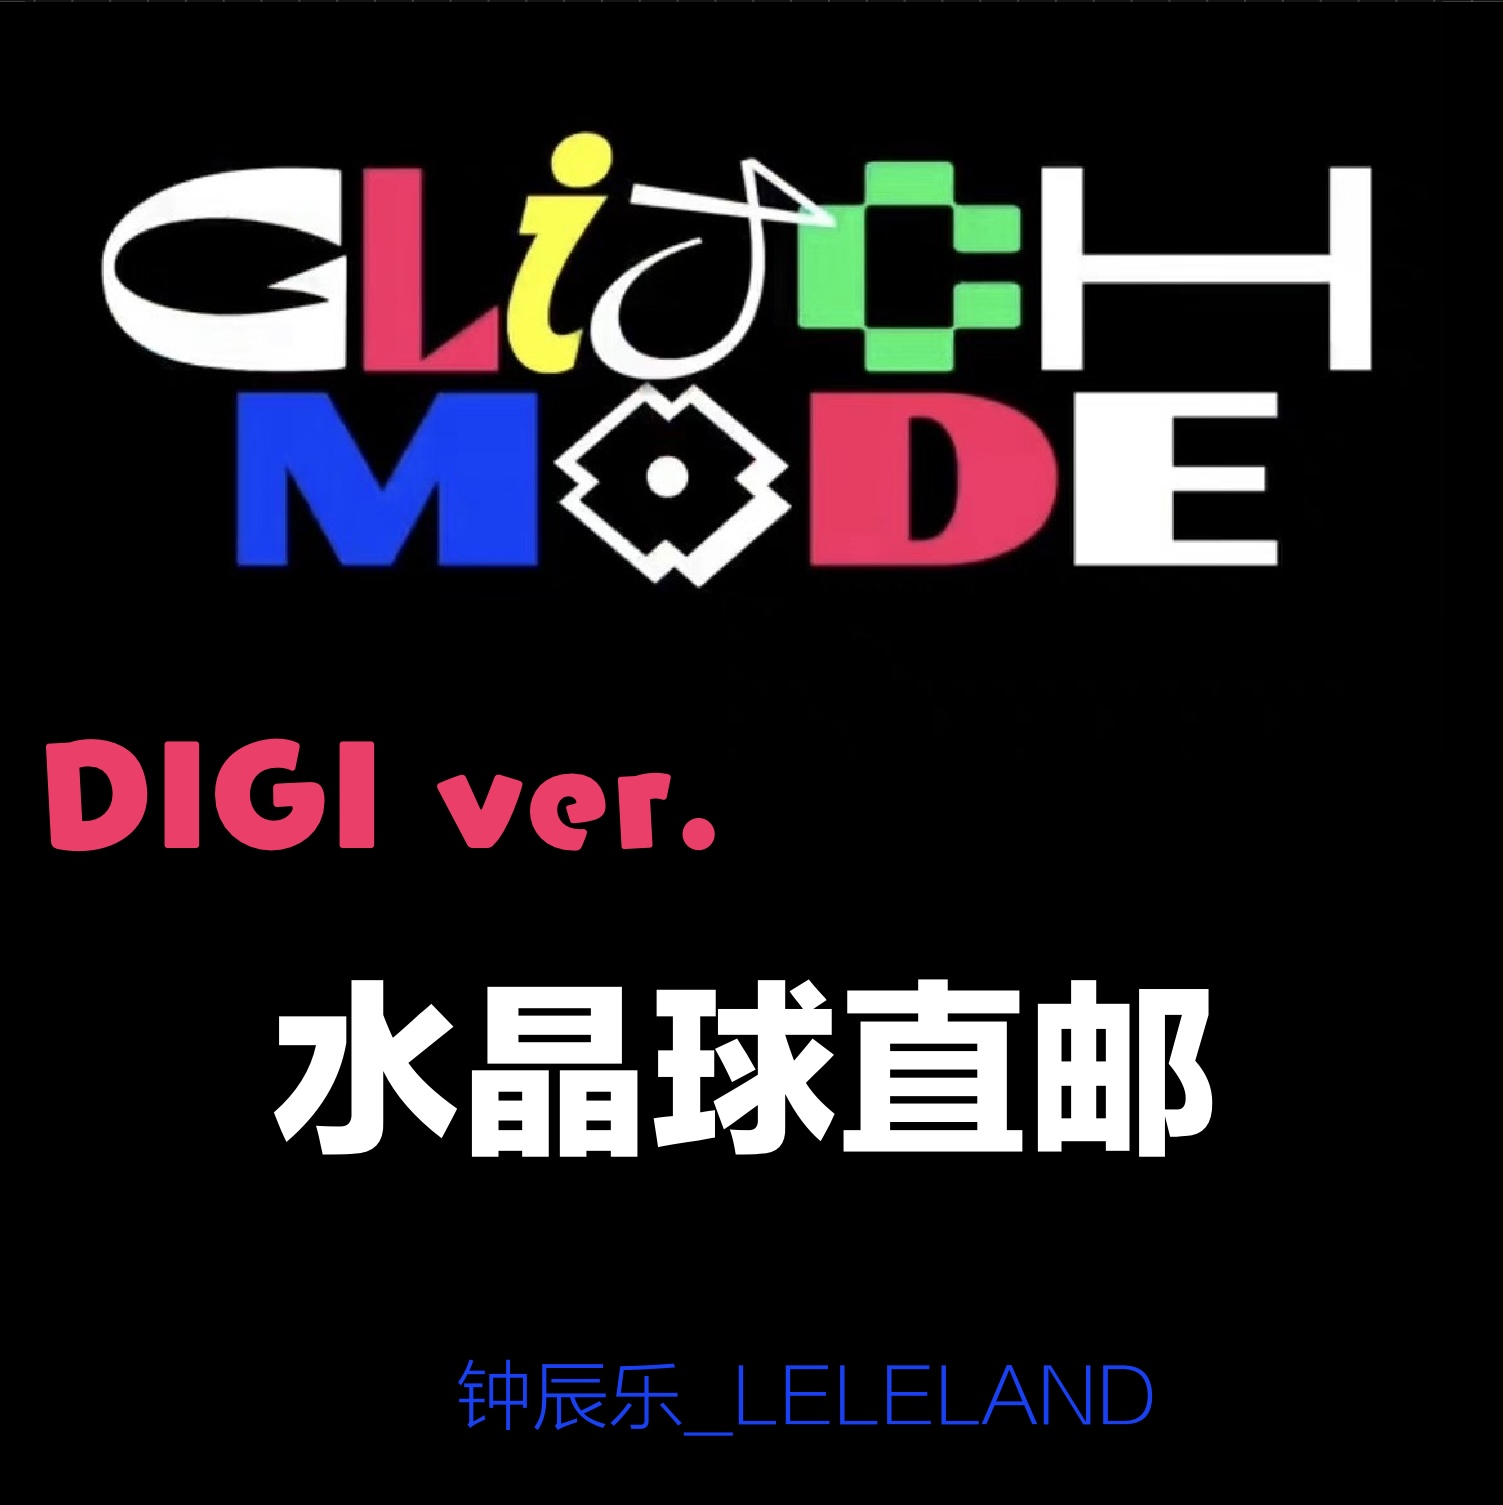 [全款 水晶球特典] NCT DREAM - 正规2辑 [Glitch Mode] (Digipack Ver.) (随机版本)_钟辰乐吧_ChenLeBar